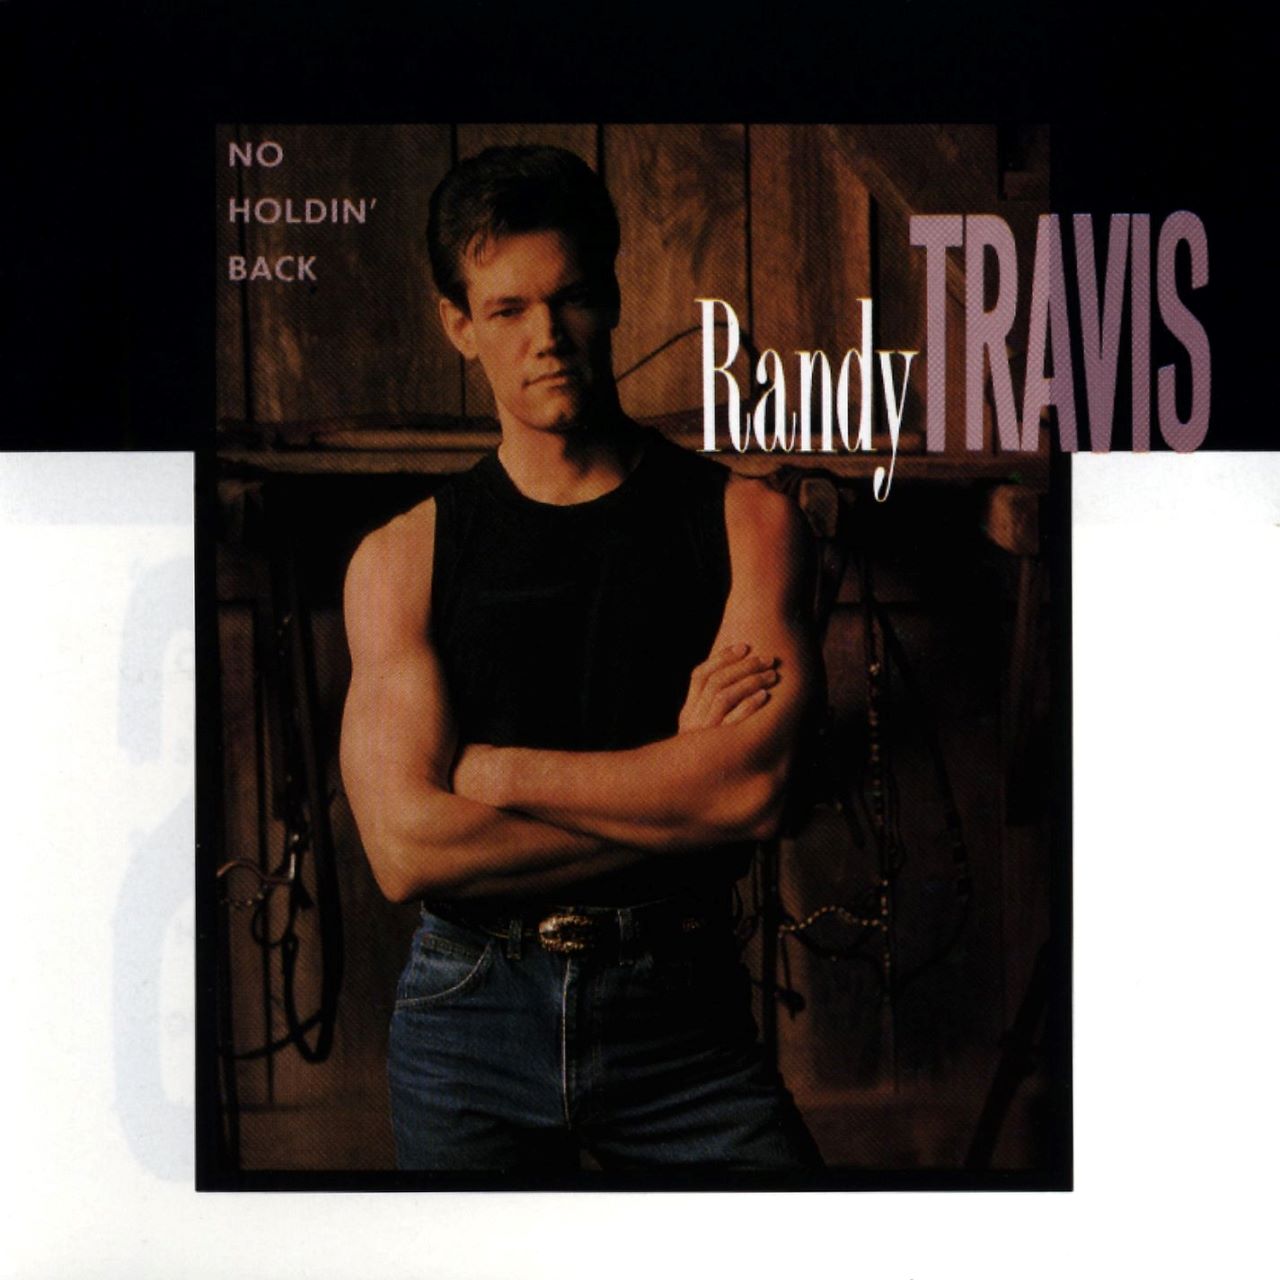 Randy Travis – No Holdin’ Back cover album